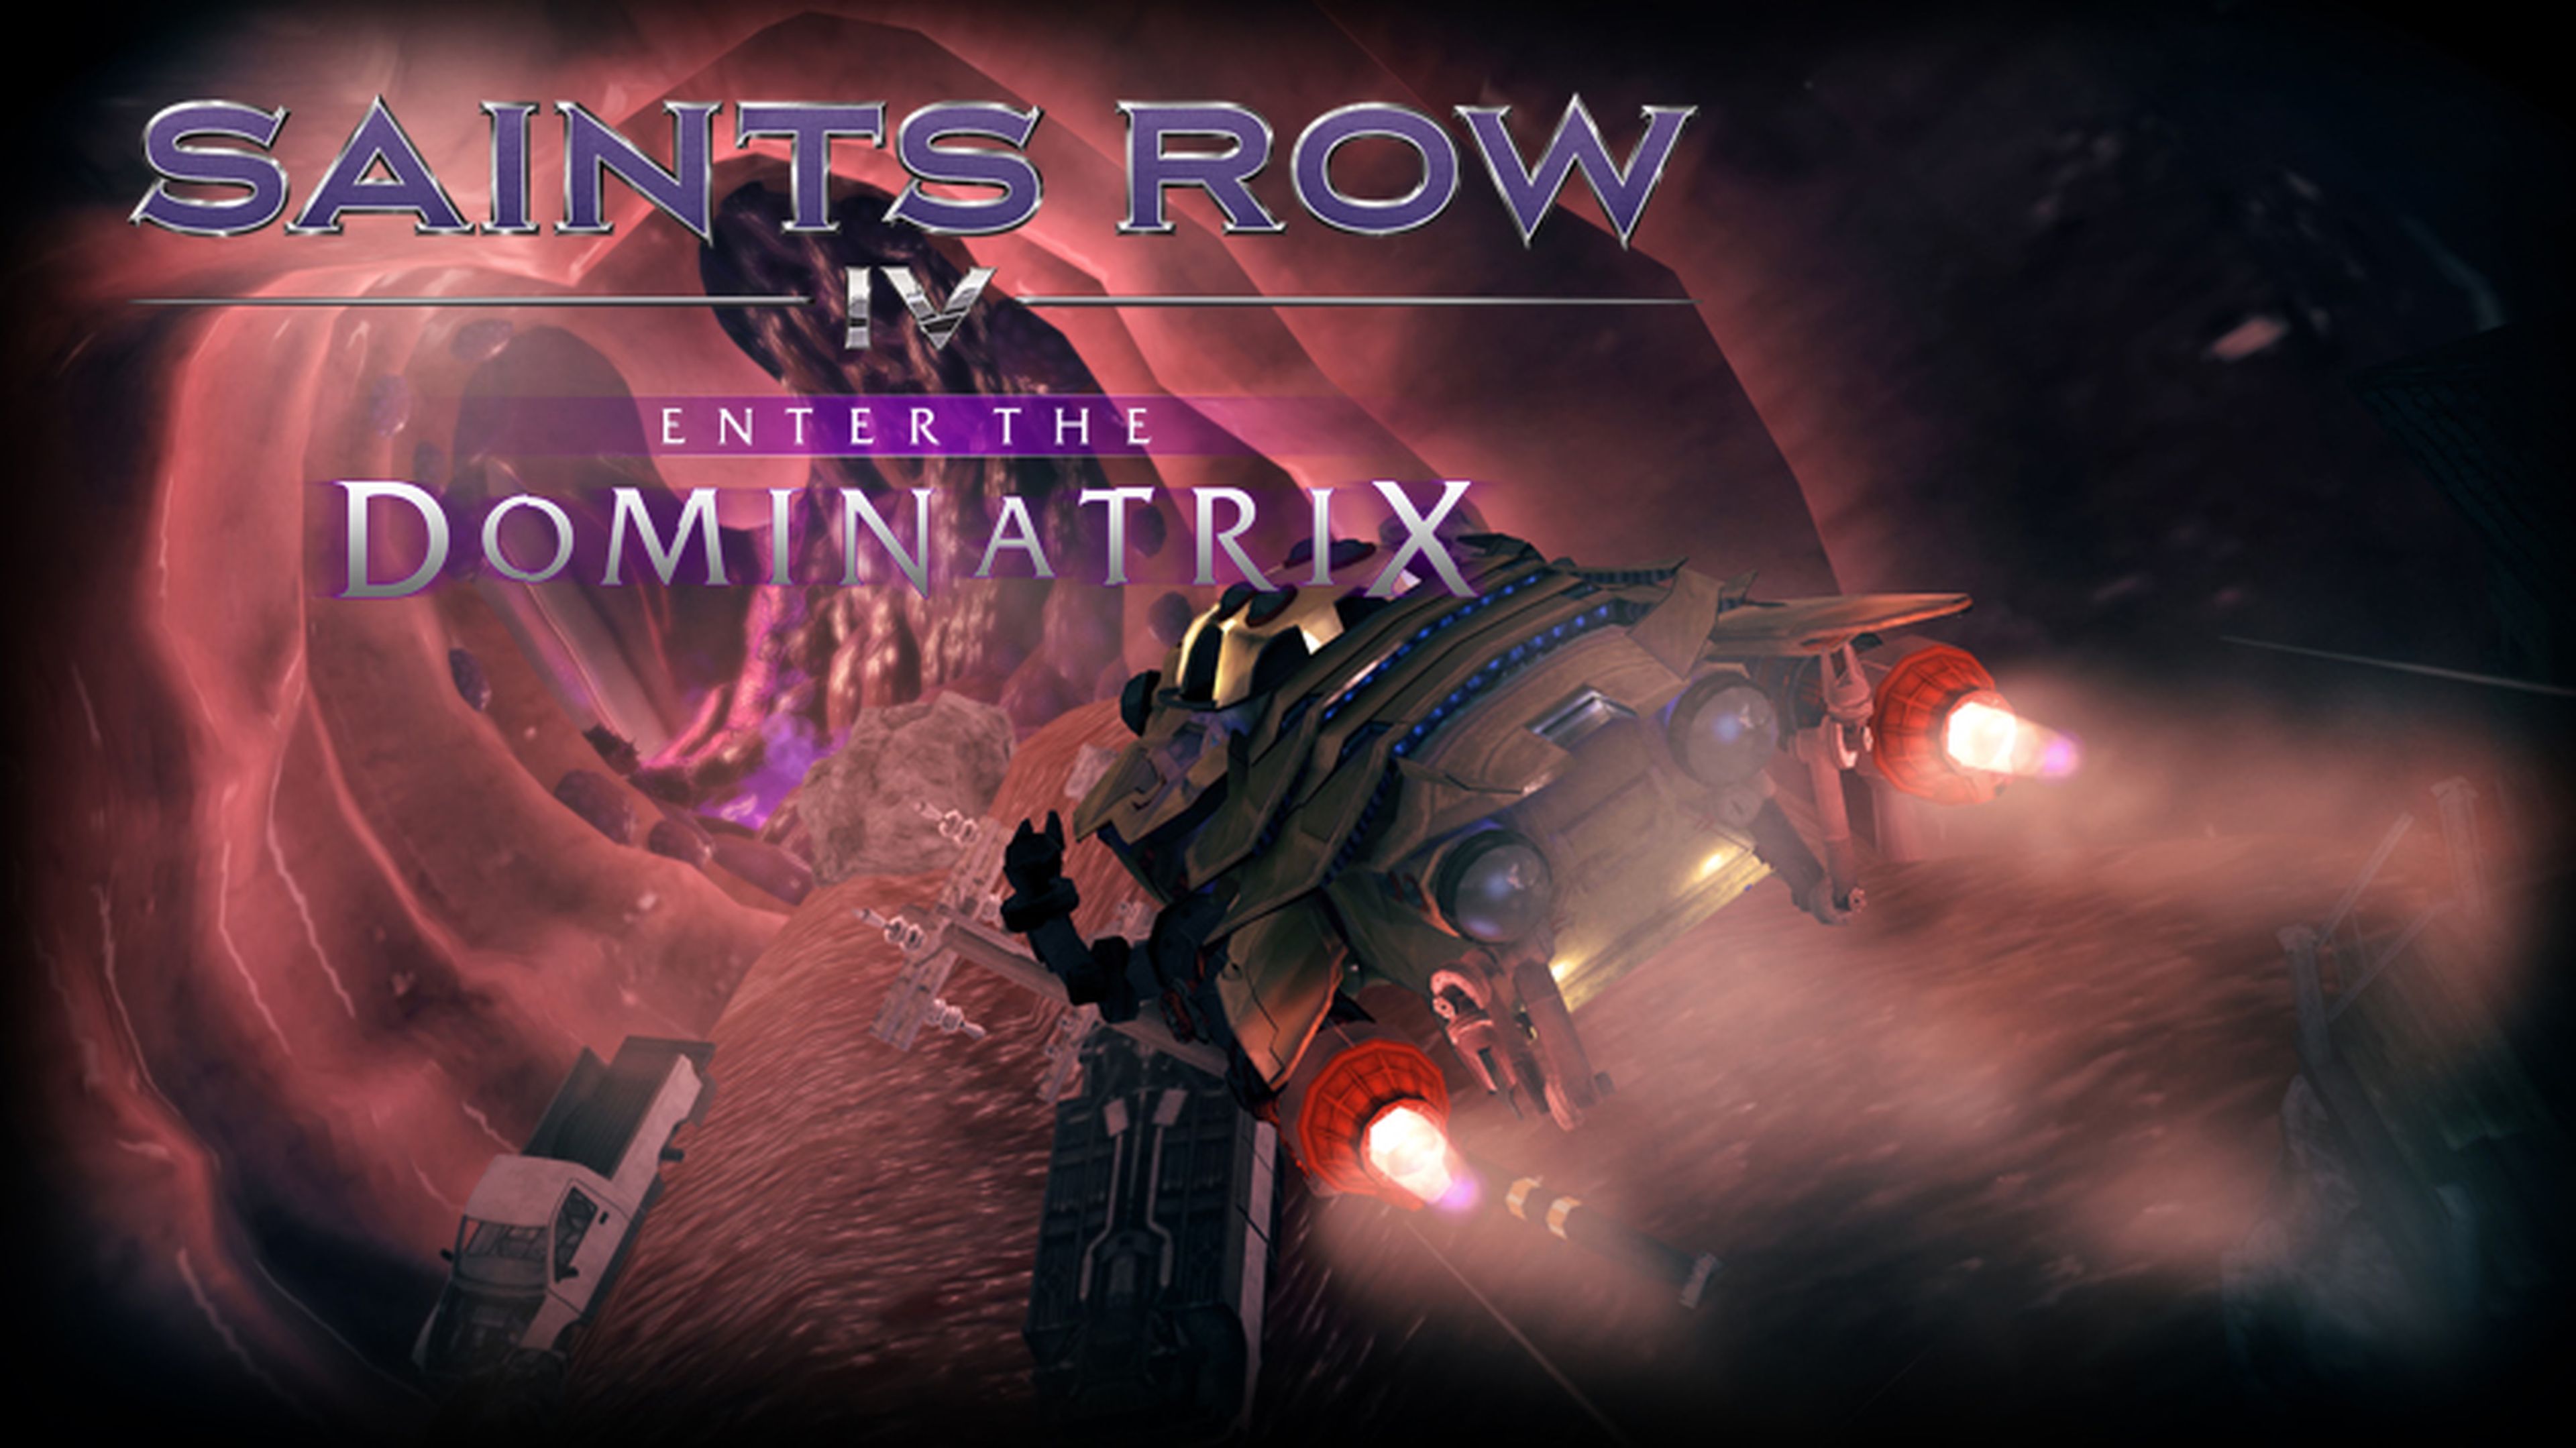 Enter the Dominatrix, nuevo DLC para Saints Row IV